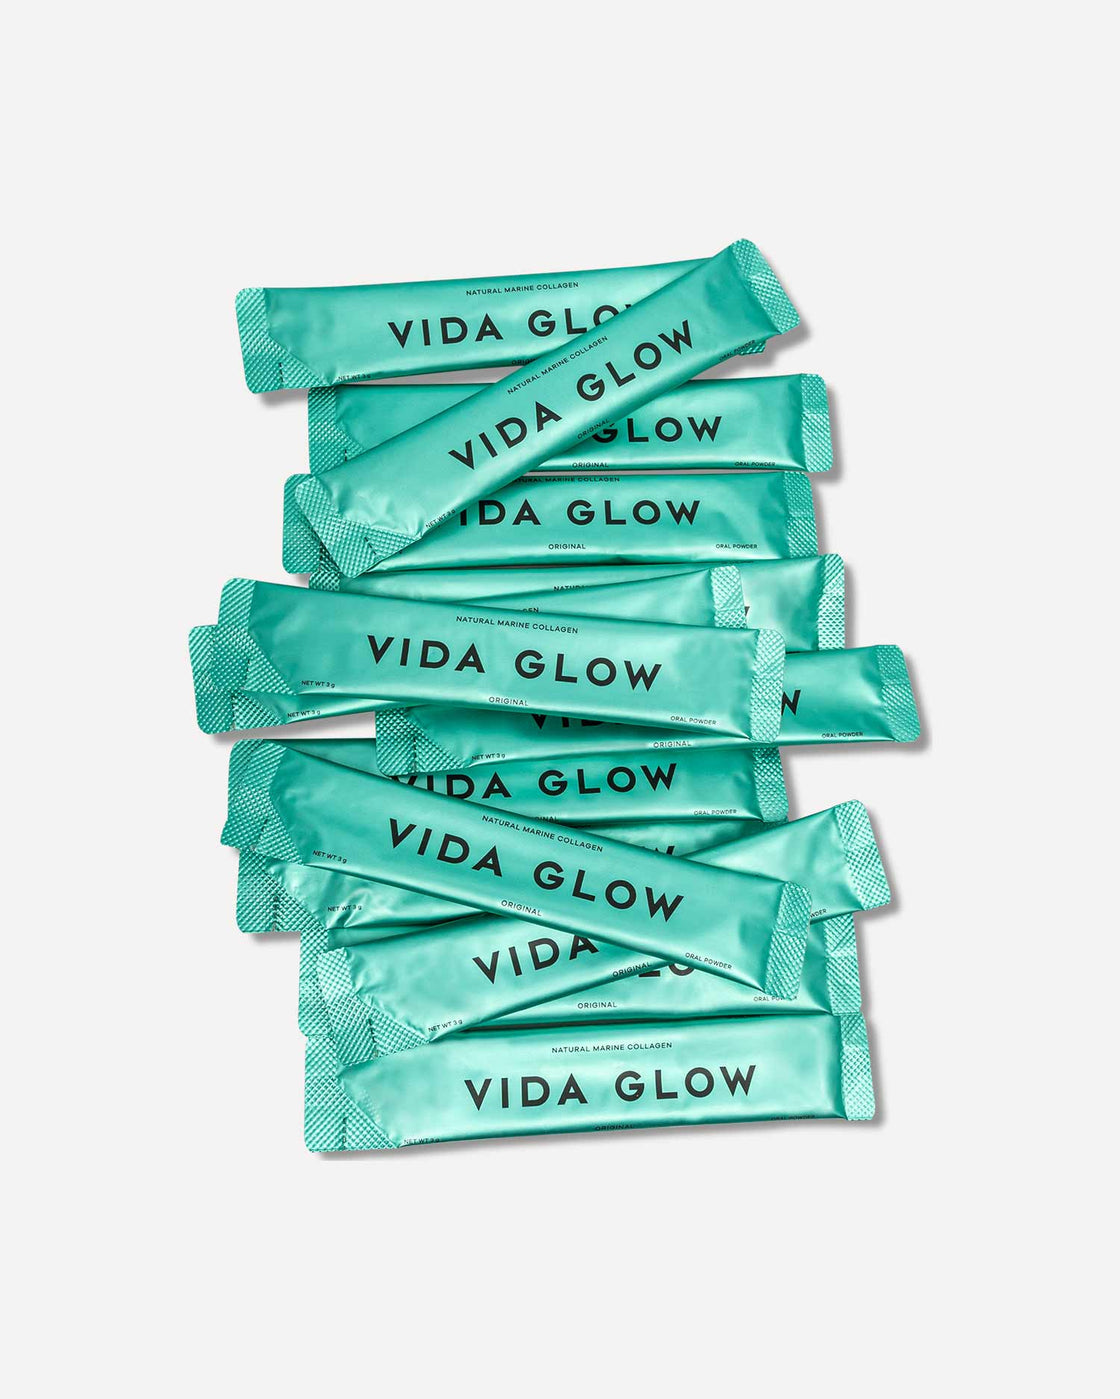 Vida Glow | Natural Marine Collagen 14 Day Trial Pack - Original